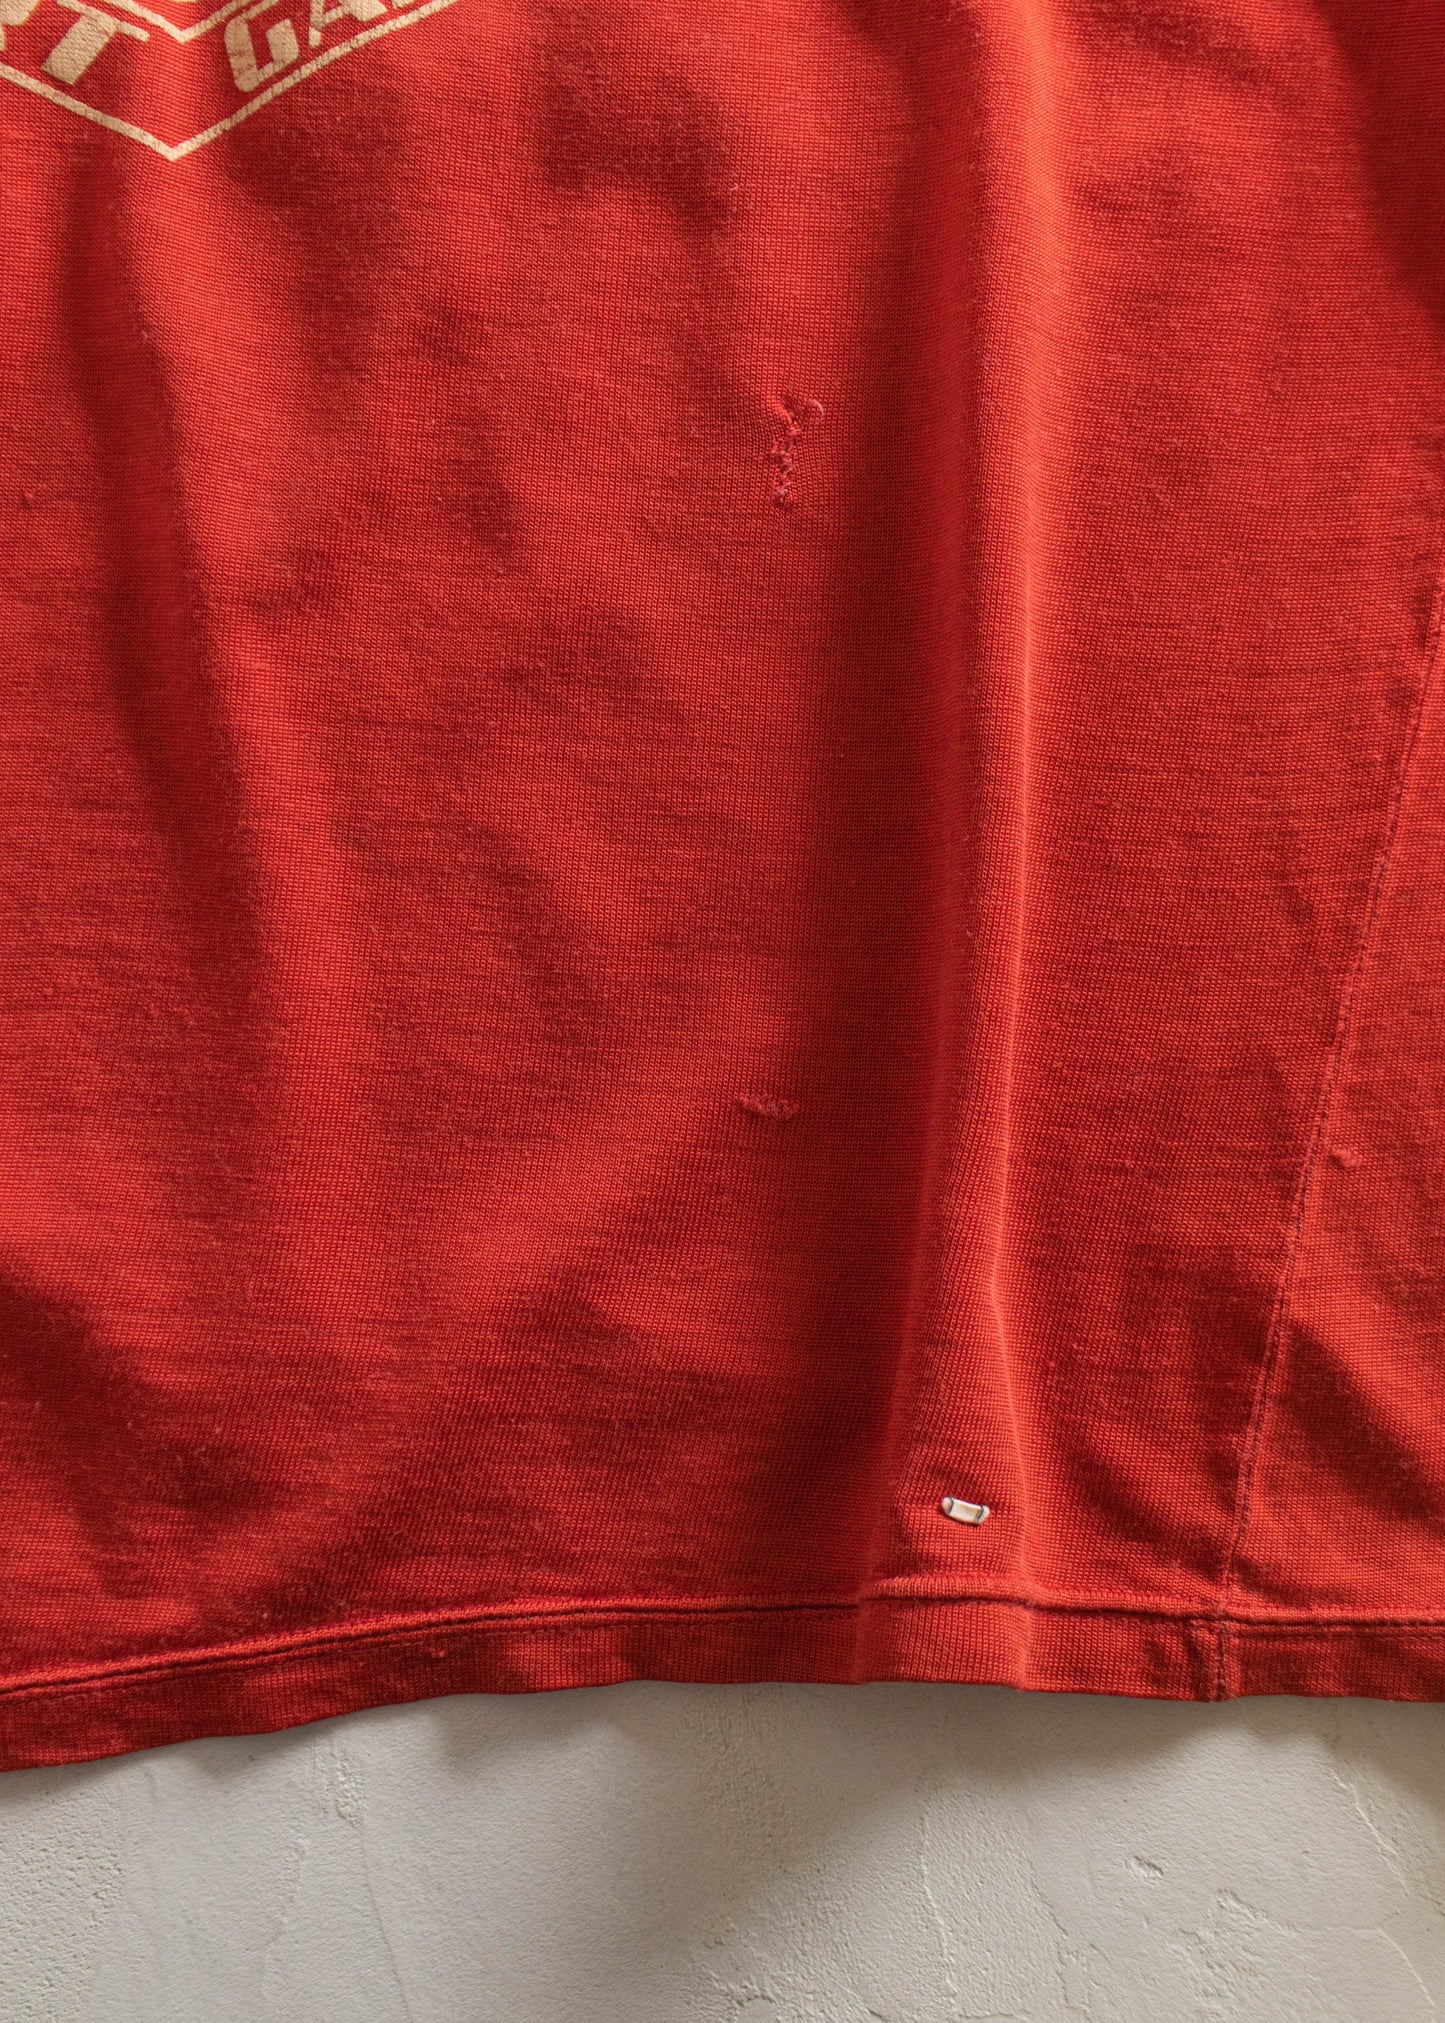 1960s Ecole Secondaire Albert Gariepy 3/4 Sleeve Sport Jersey Size M/L